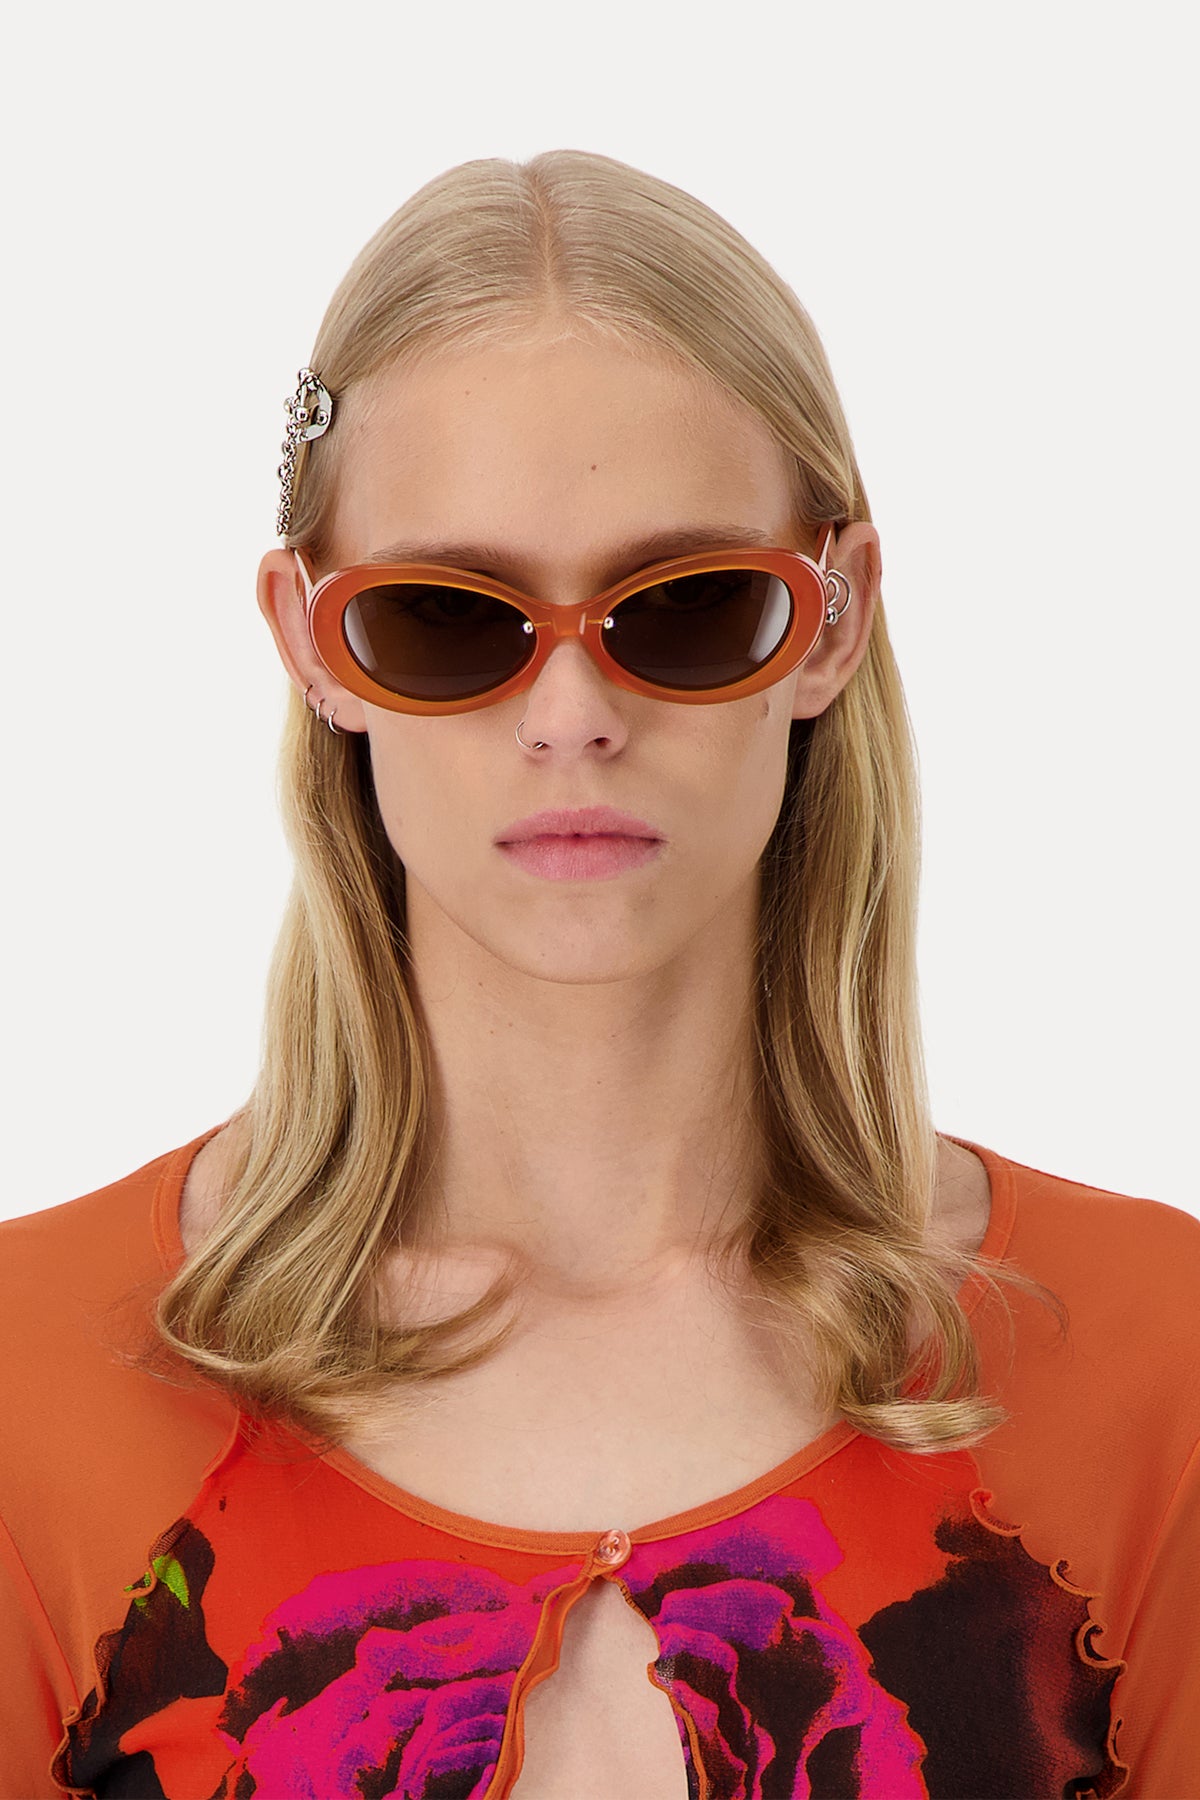 Drew orange sunglasses